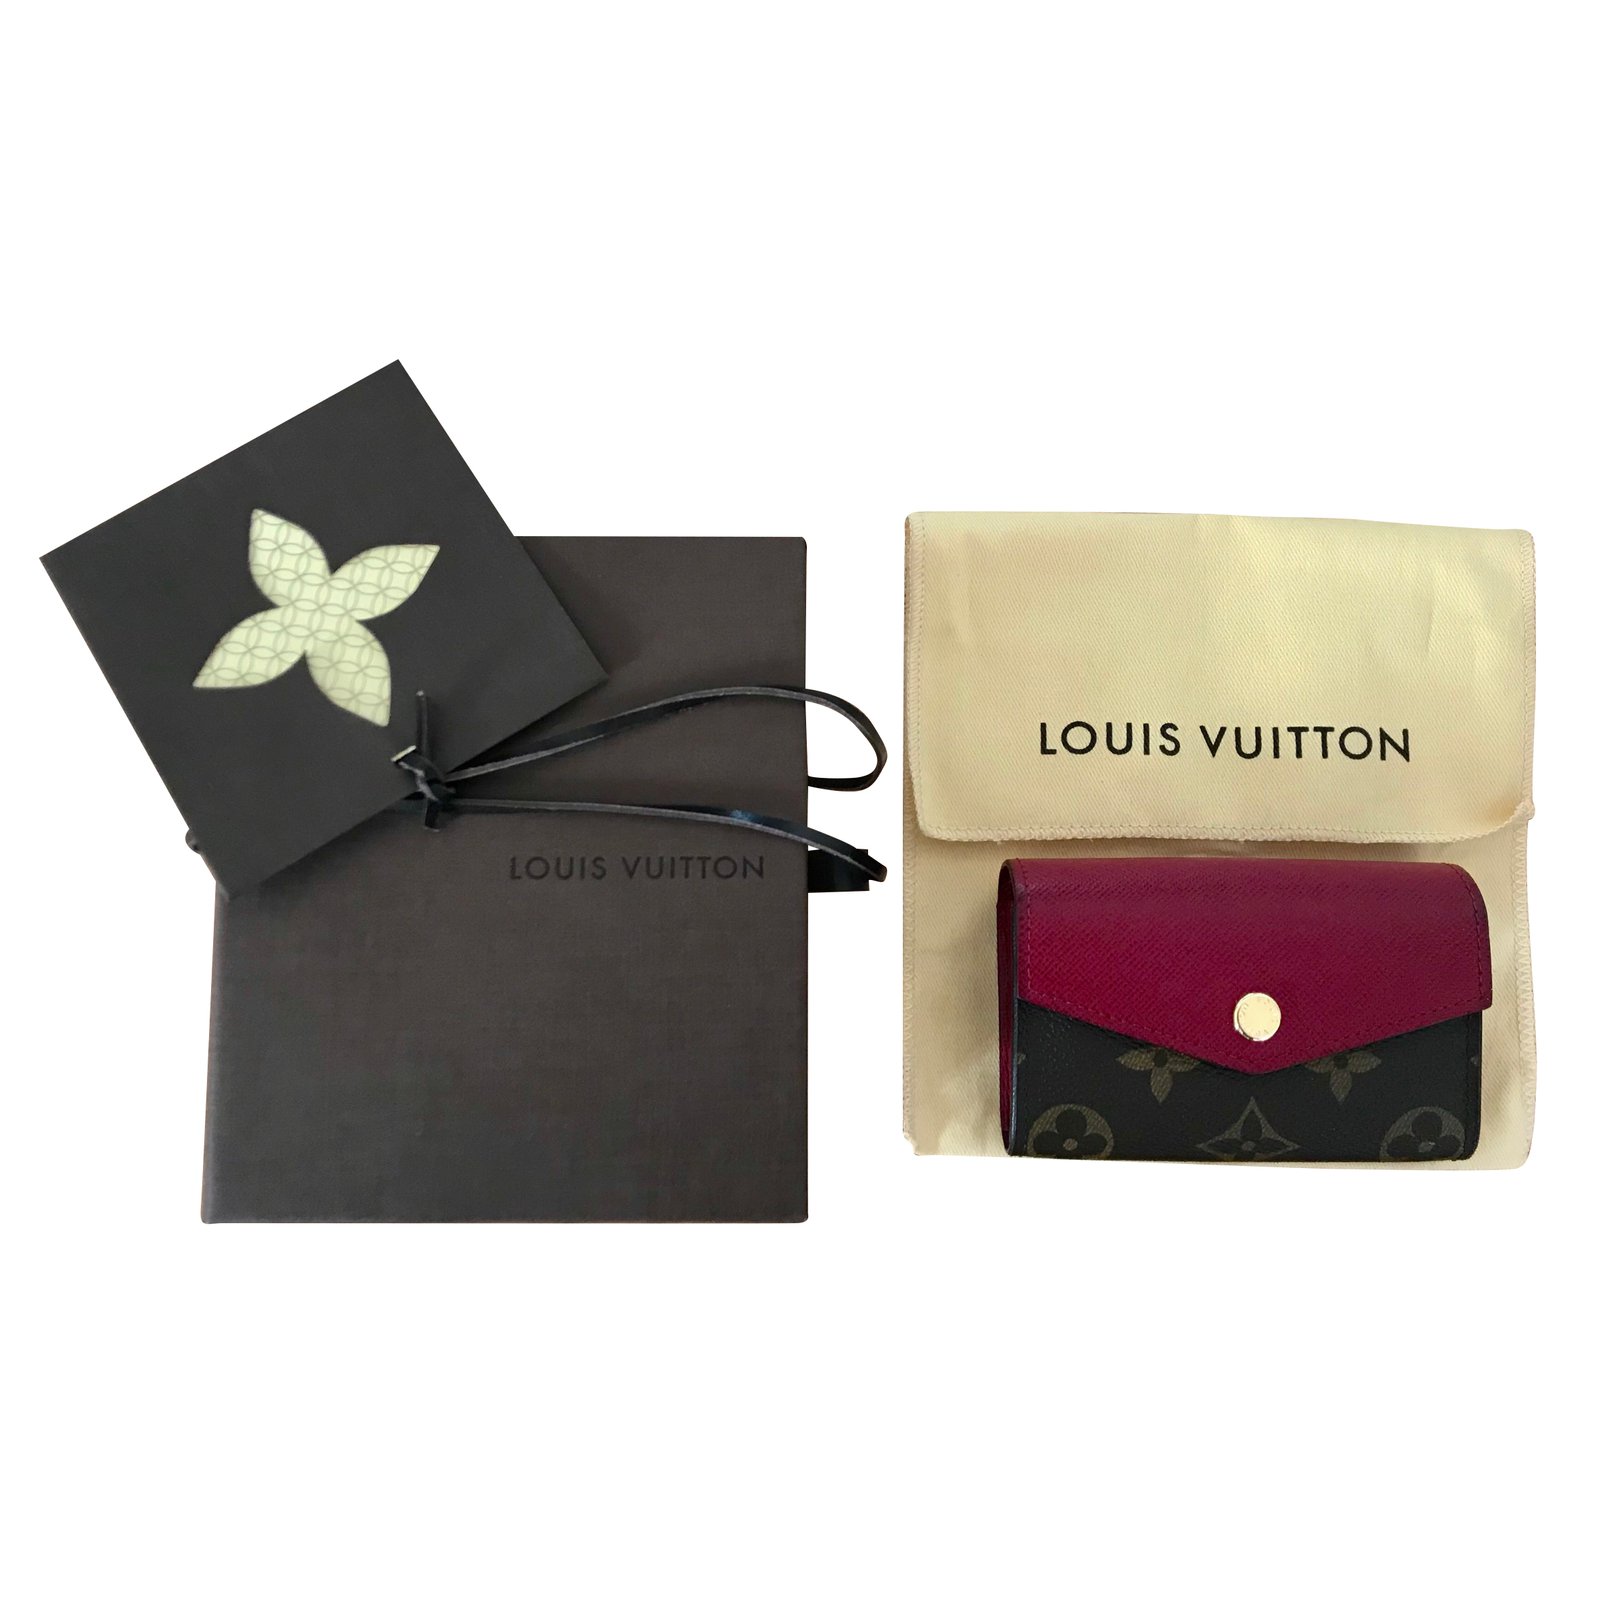 Louis Vuitton - Monogram Canvas Envelope Style Sarah Wallet